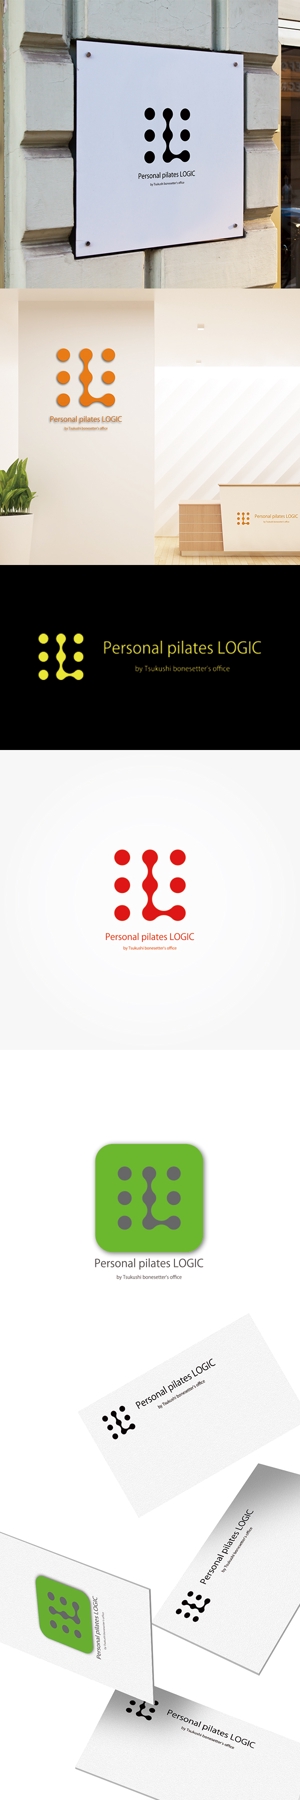 kino (labokino)さんのパースナルピラティススタジオ「LOGIC」のロゴデザインの仕事への提案